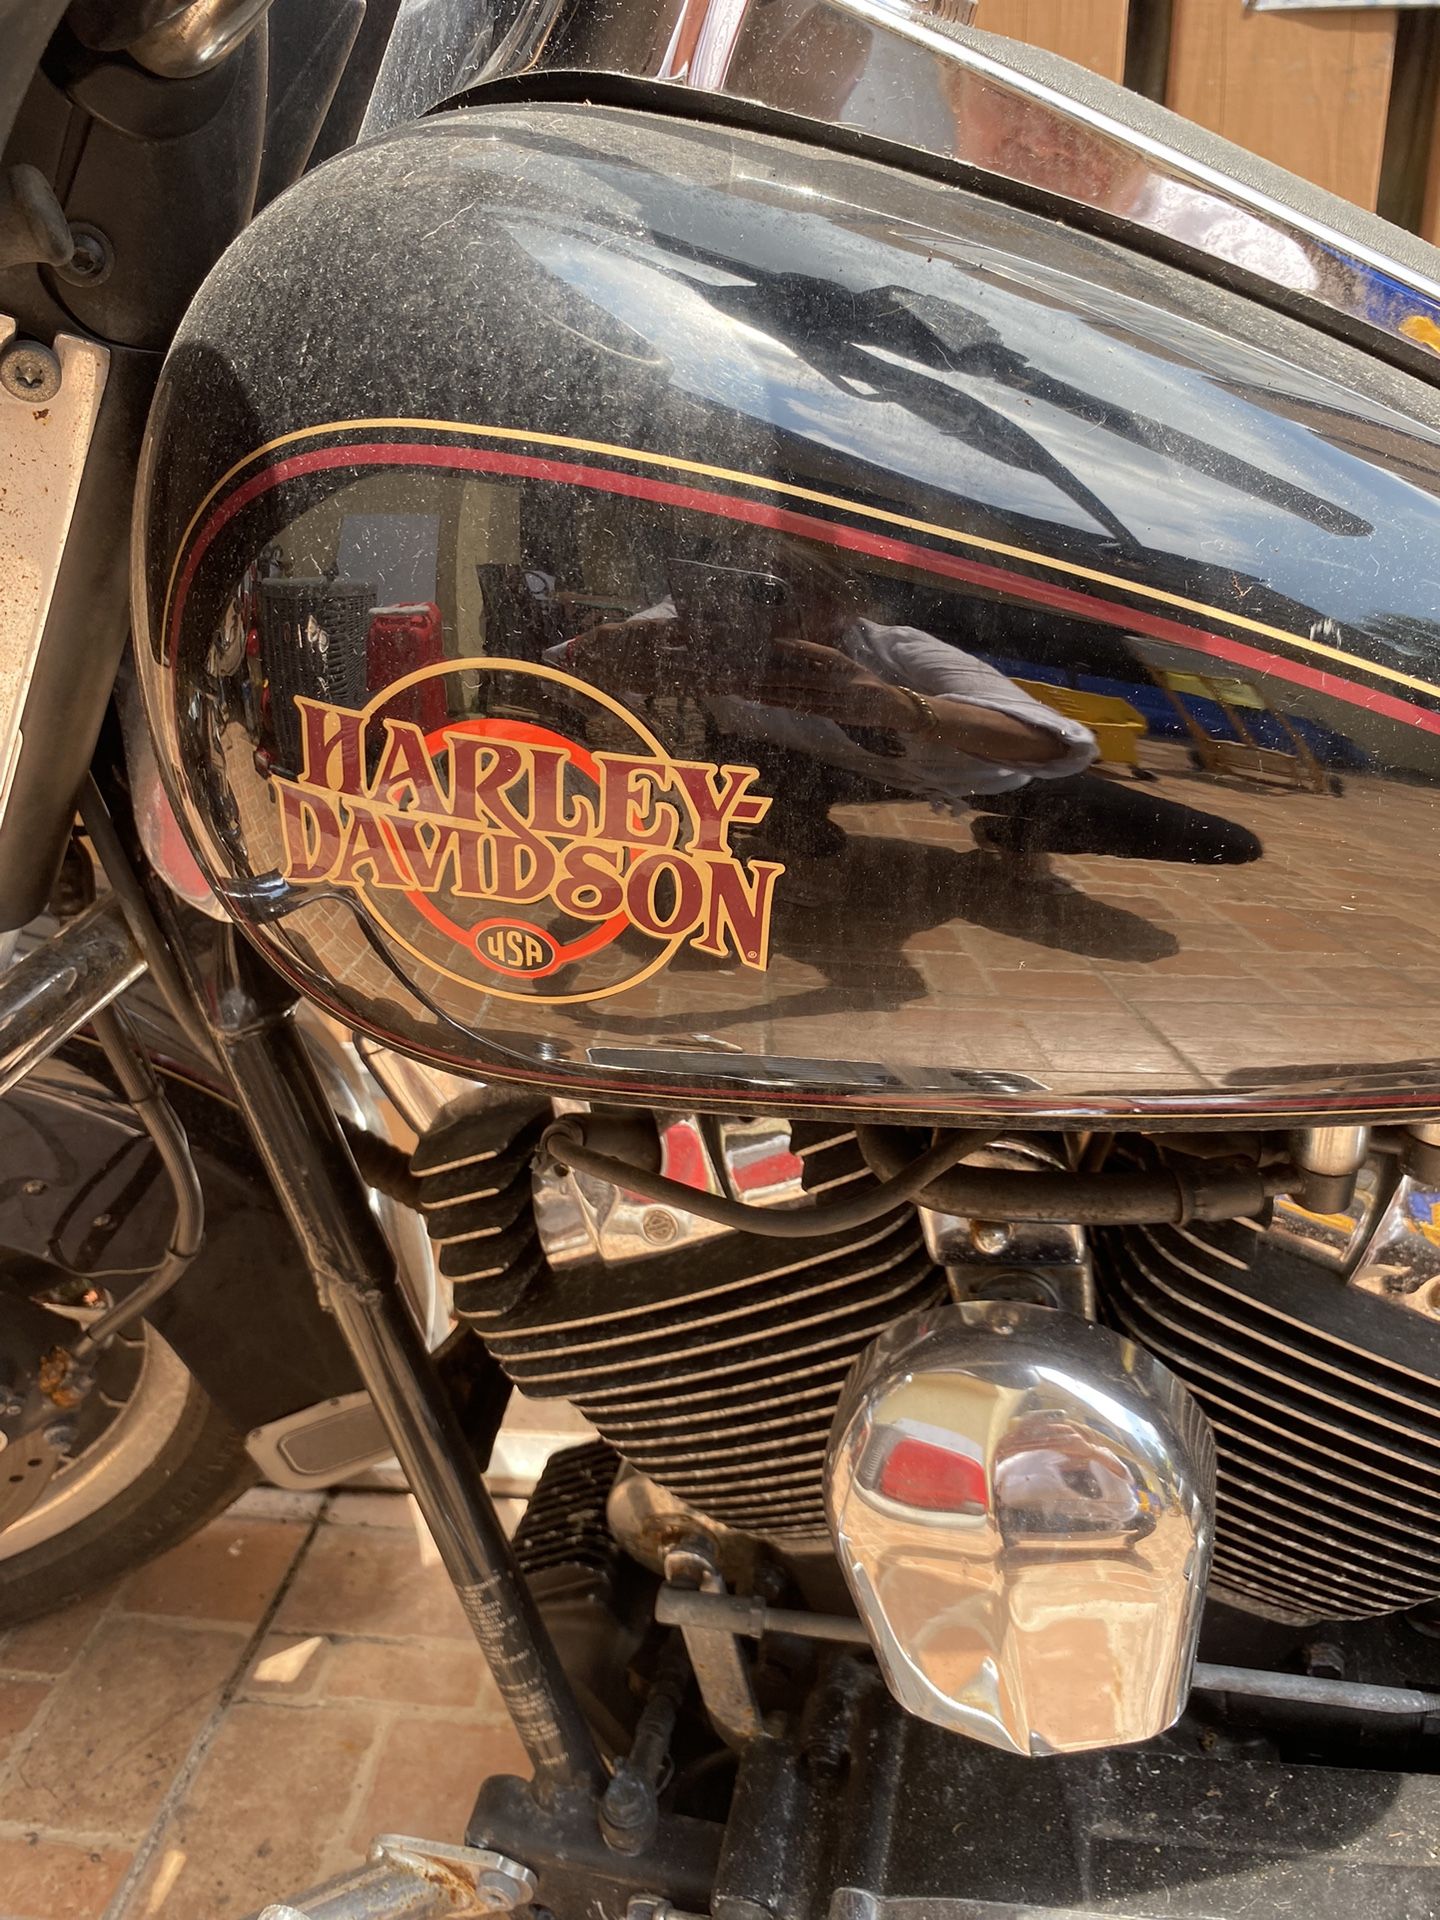 2001 Harley Davidson